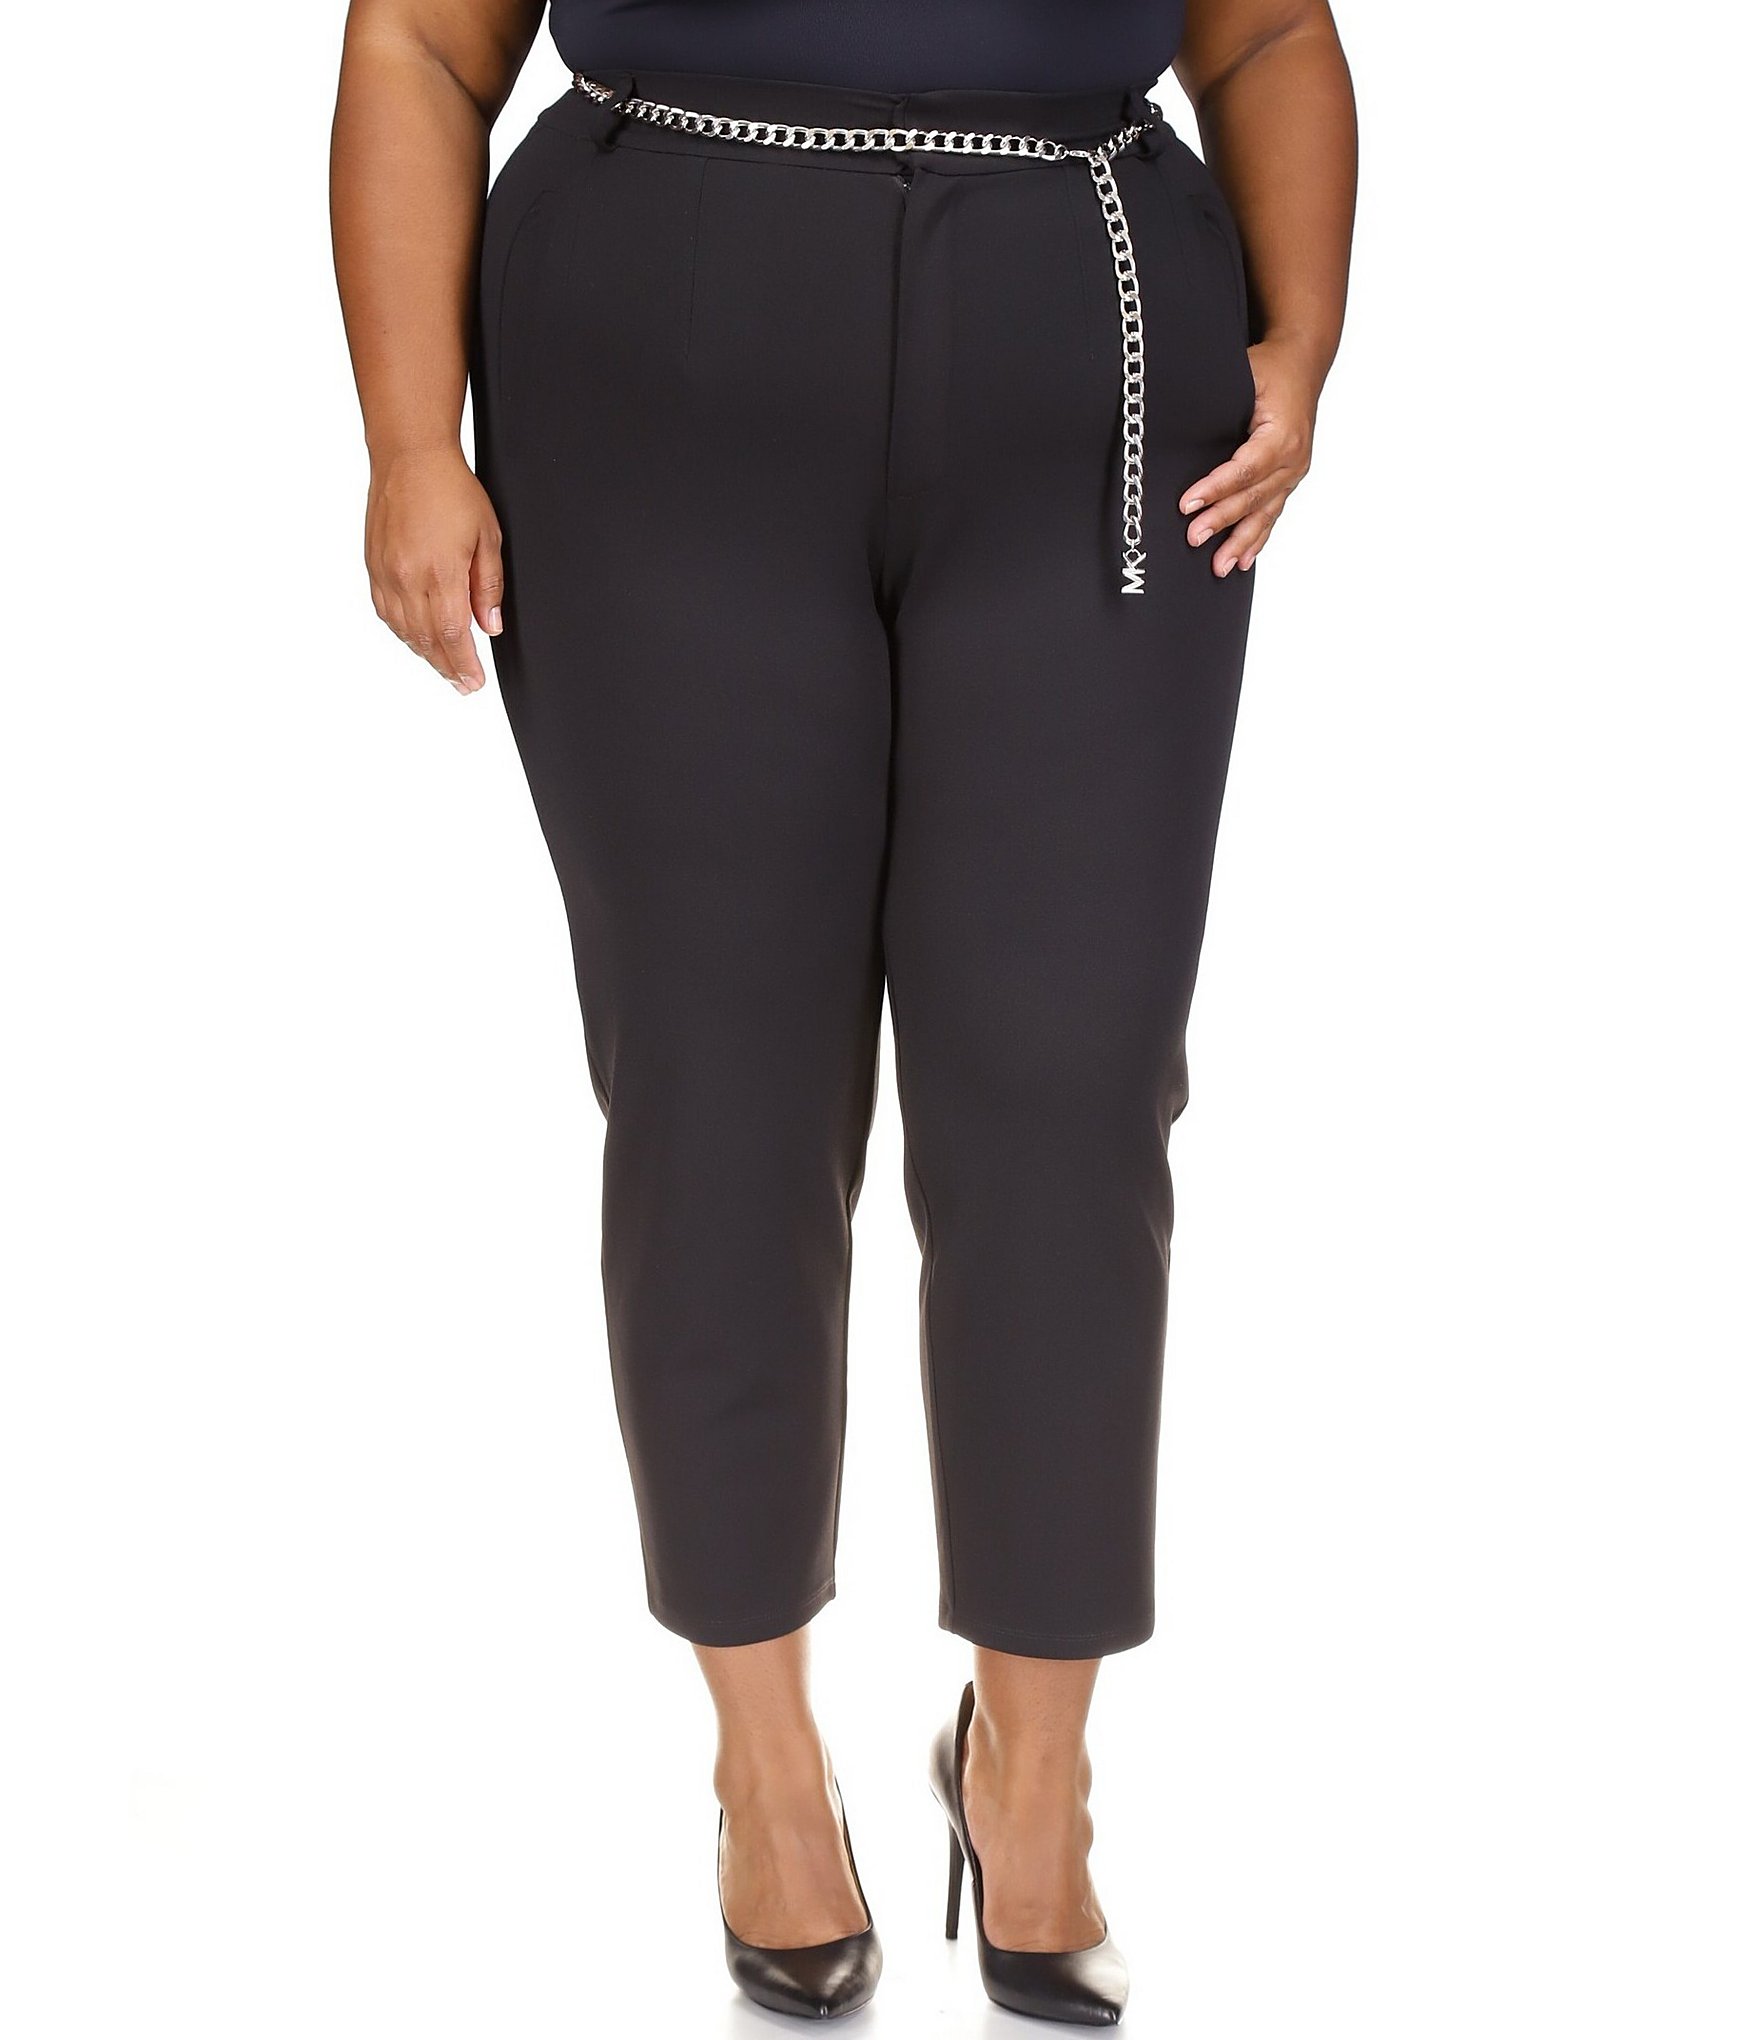 MKex Seluar Plus Size Perempuan Pants Women Plus Size Upgraded Plus Size  Stretchable Pants Jegging 2.0 [P12/926]